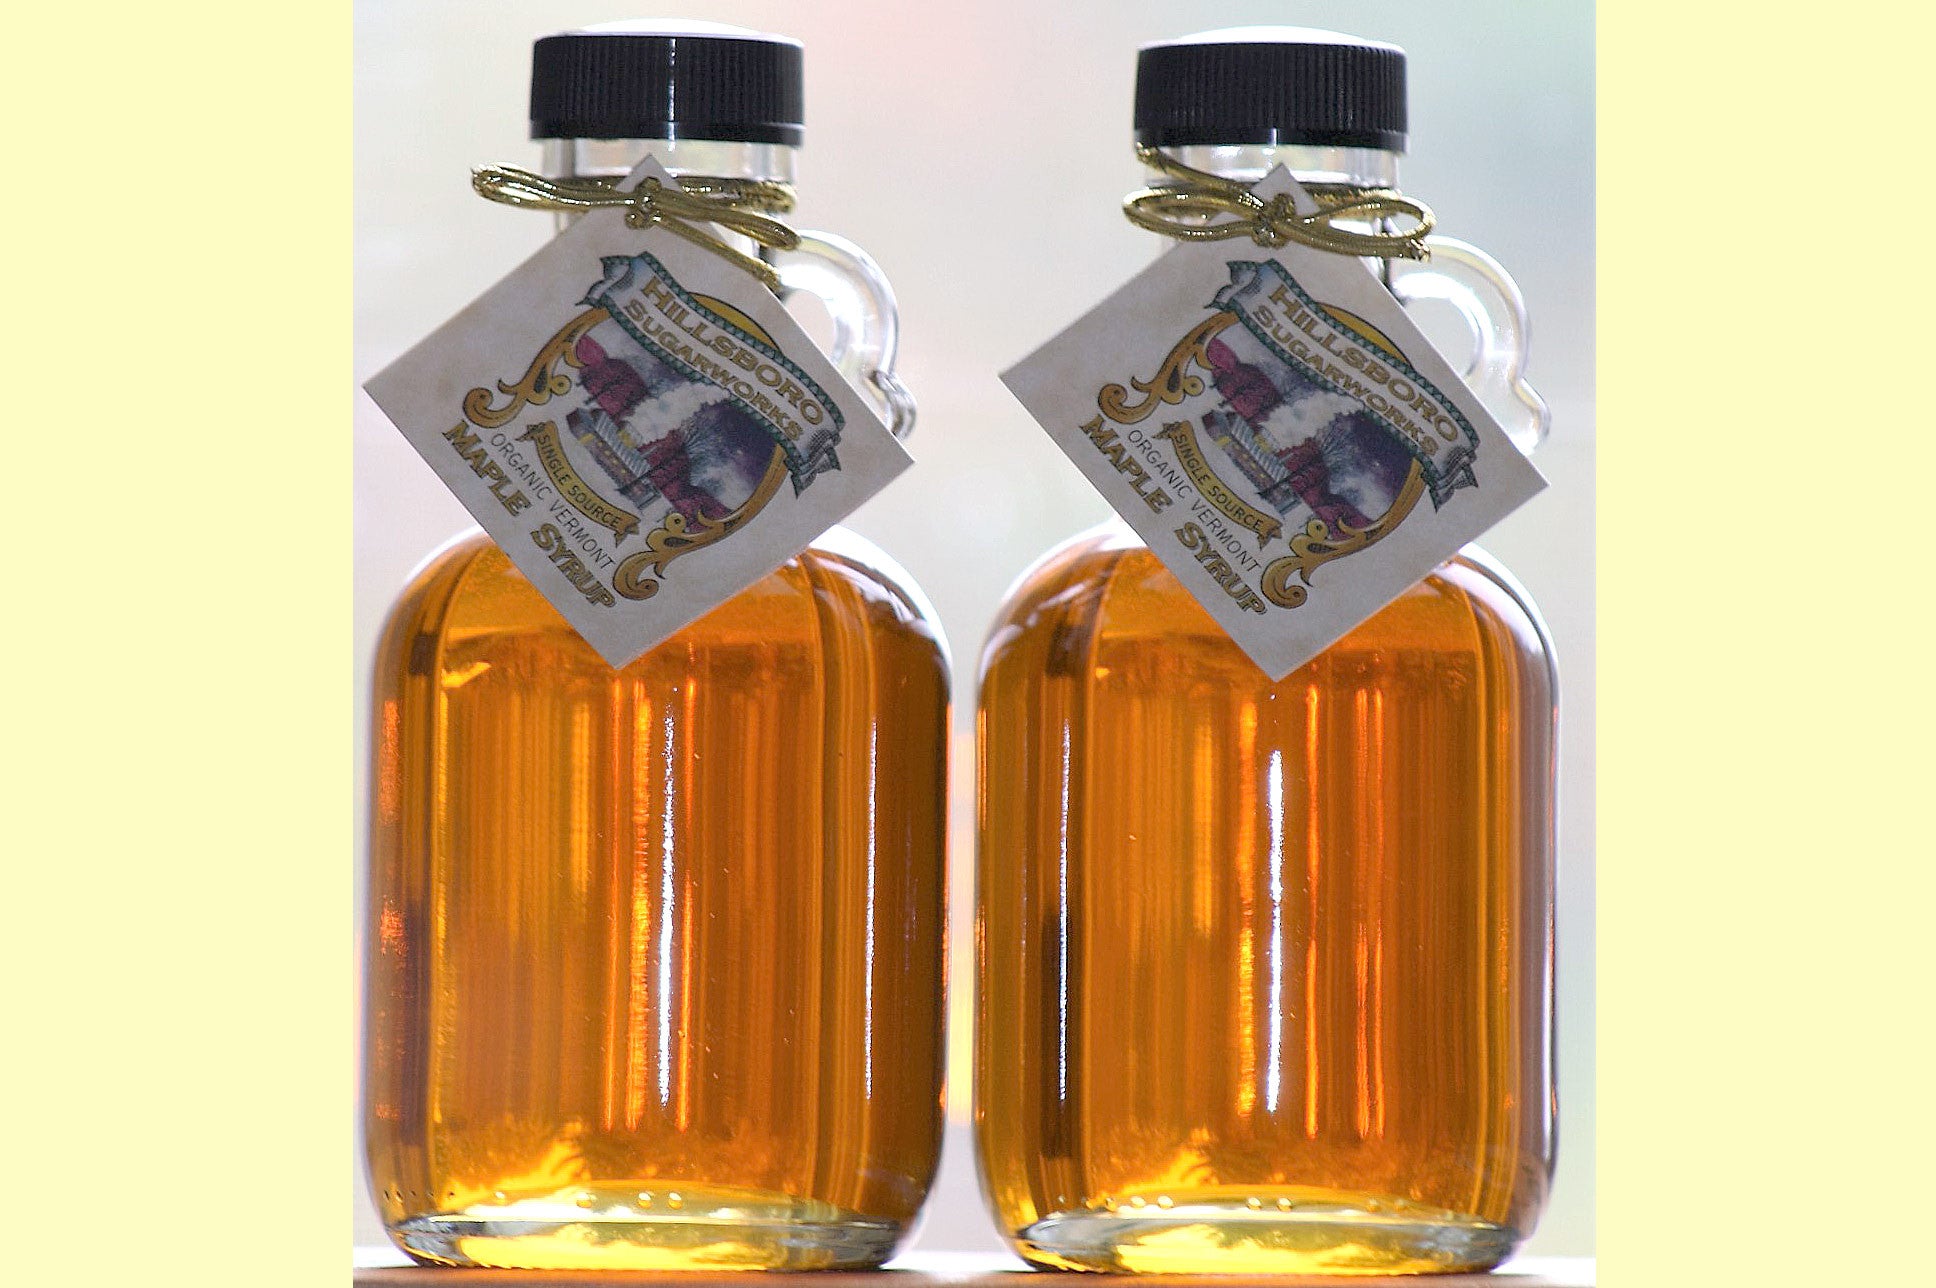 Hillsboro Sugarworks 250 ml. Golden Delicate and Amber Rich